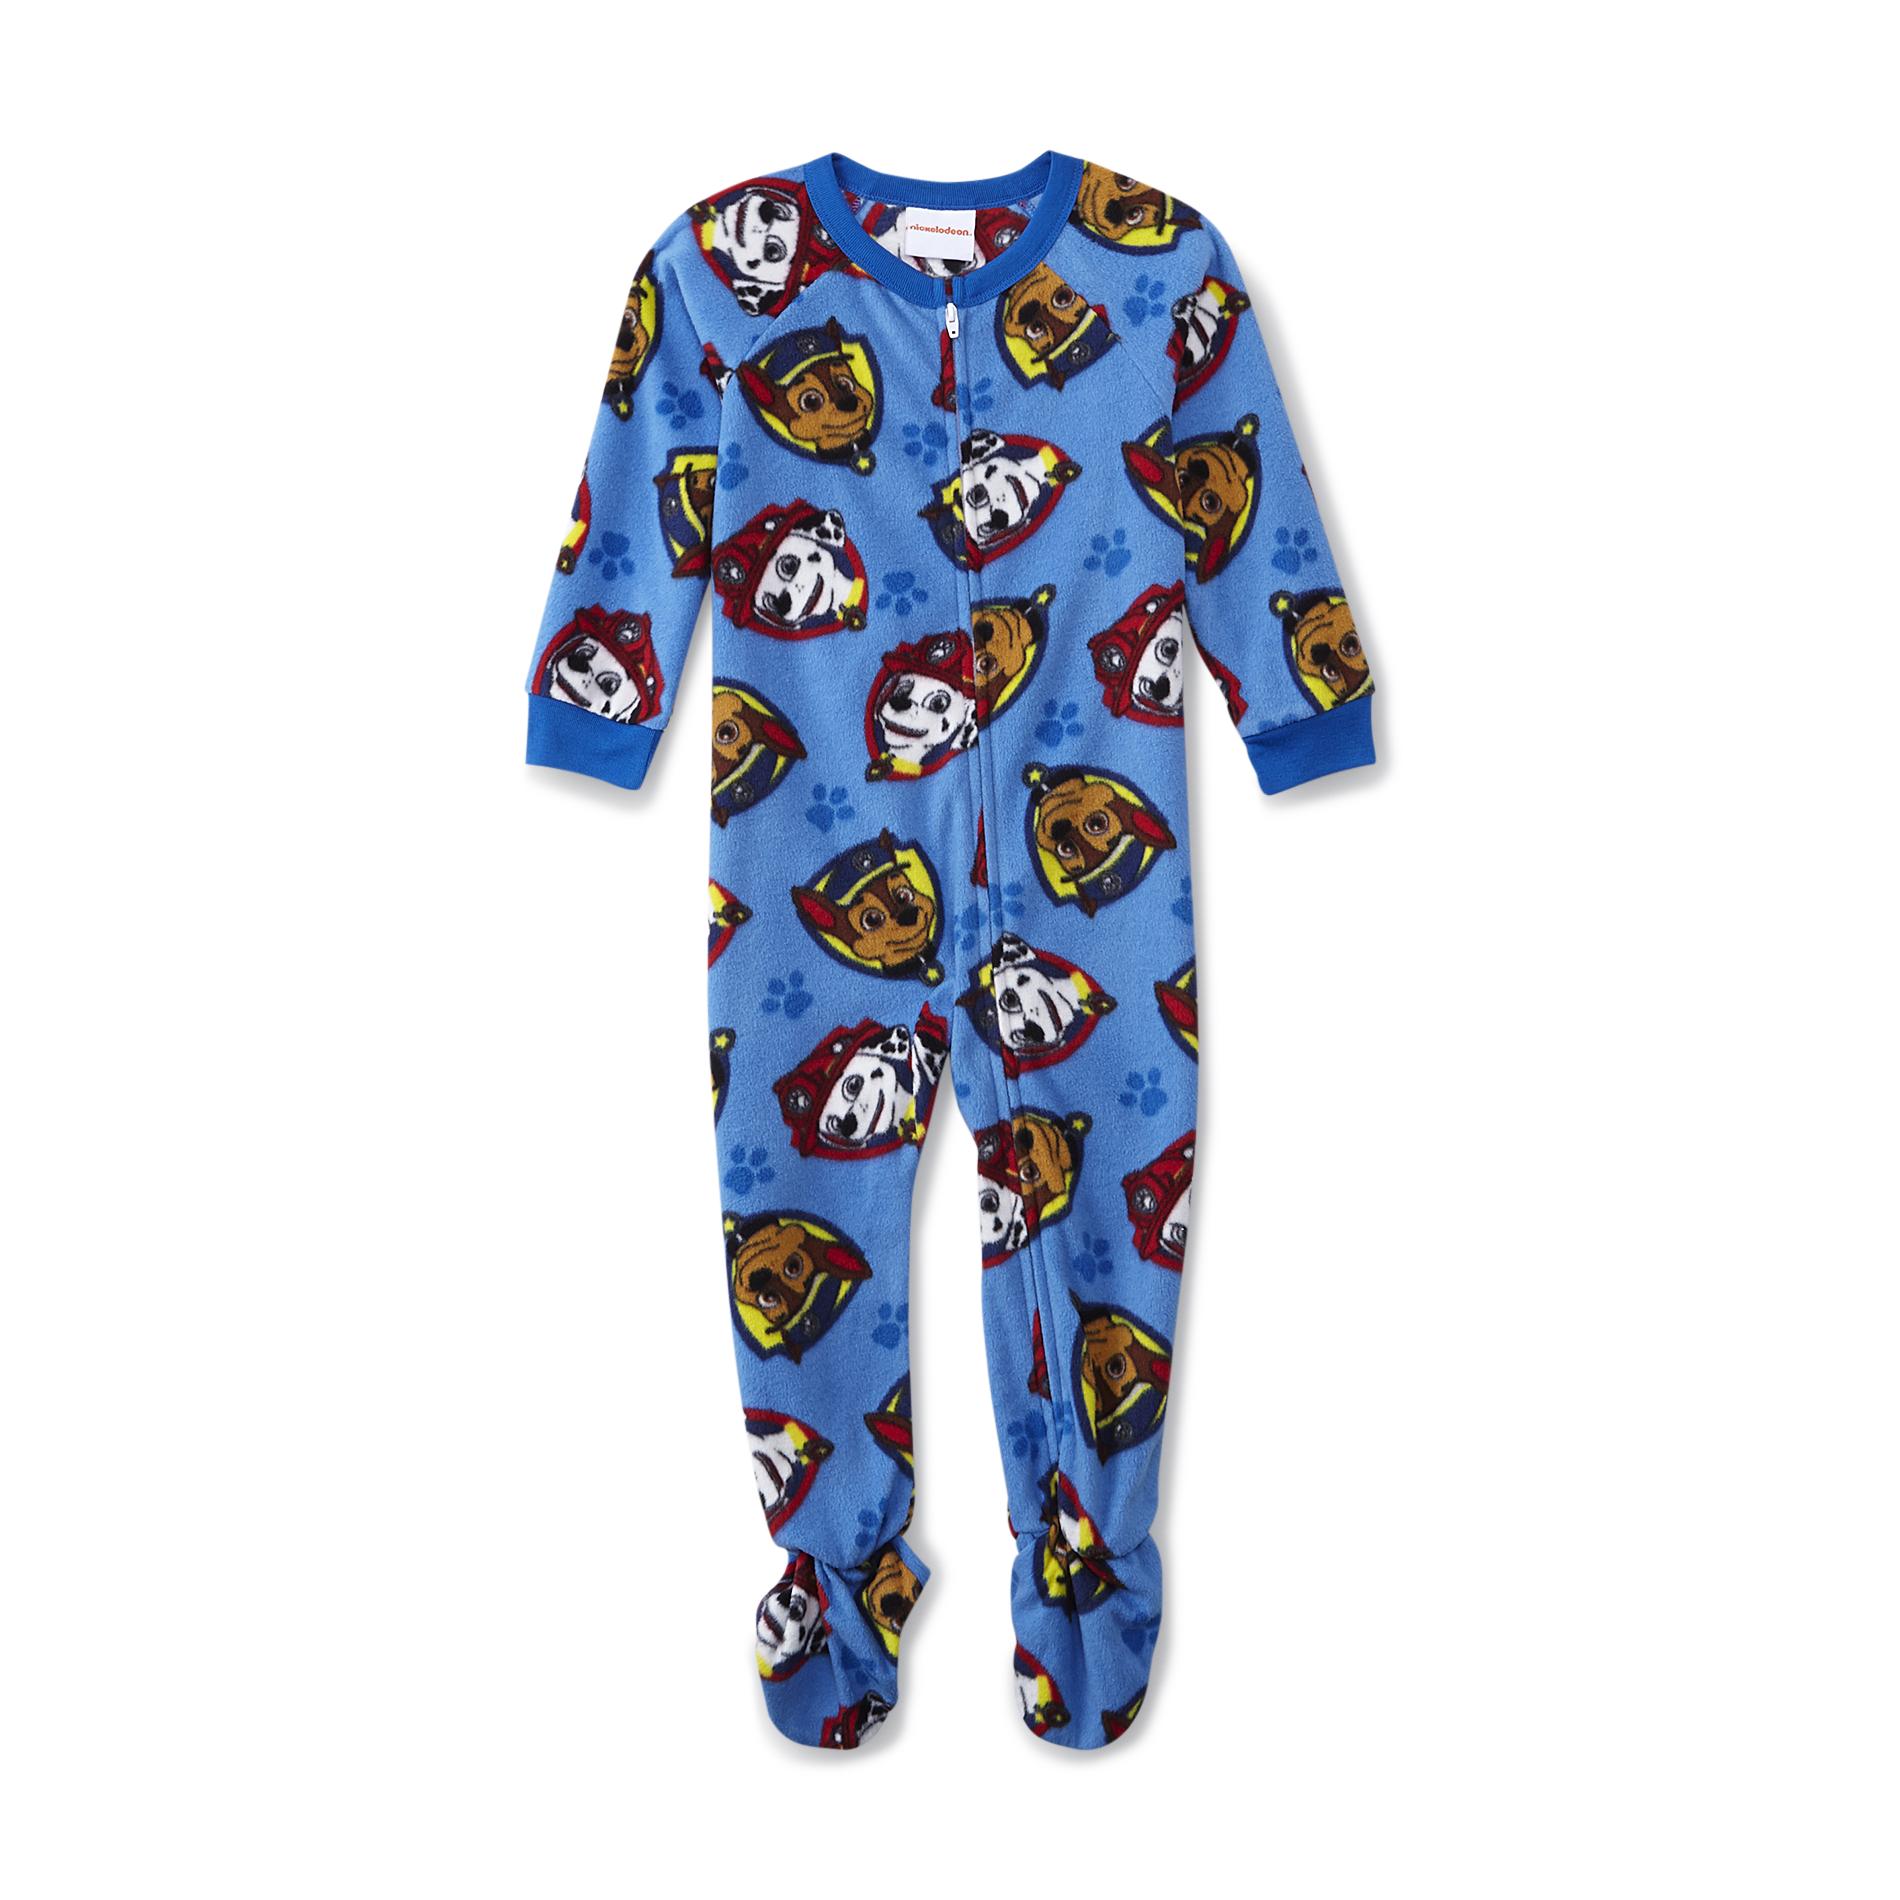 Nickelodeon PAW Patrol Toddler Boy's Fleece Sleeper Pajamas